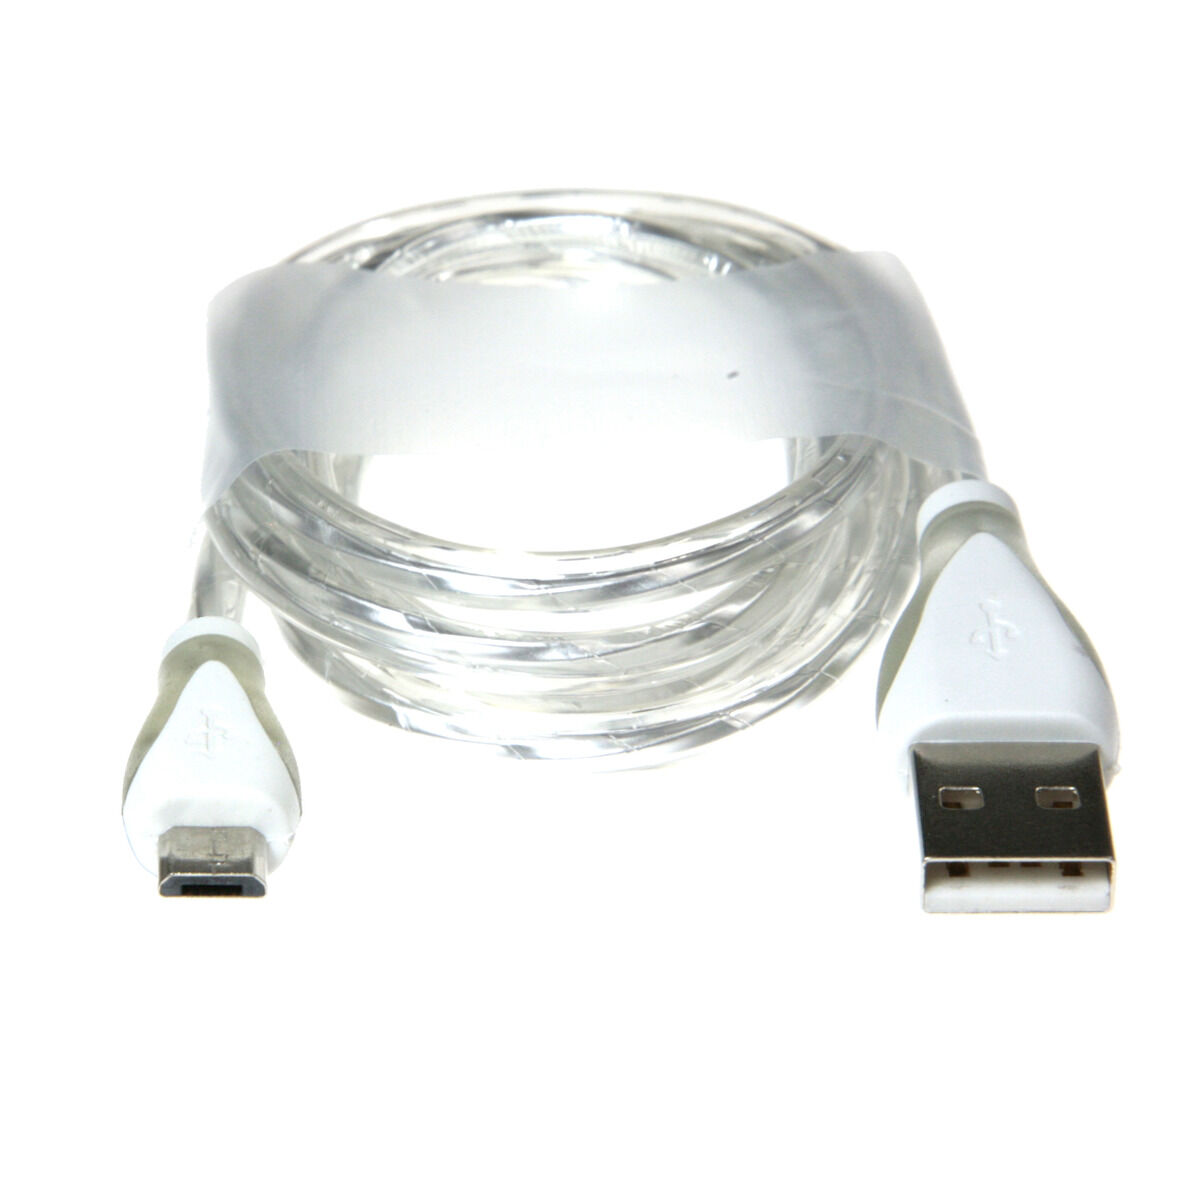 LED LITE UP MICRO USB TO USB, , scaau_hi-res